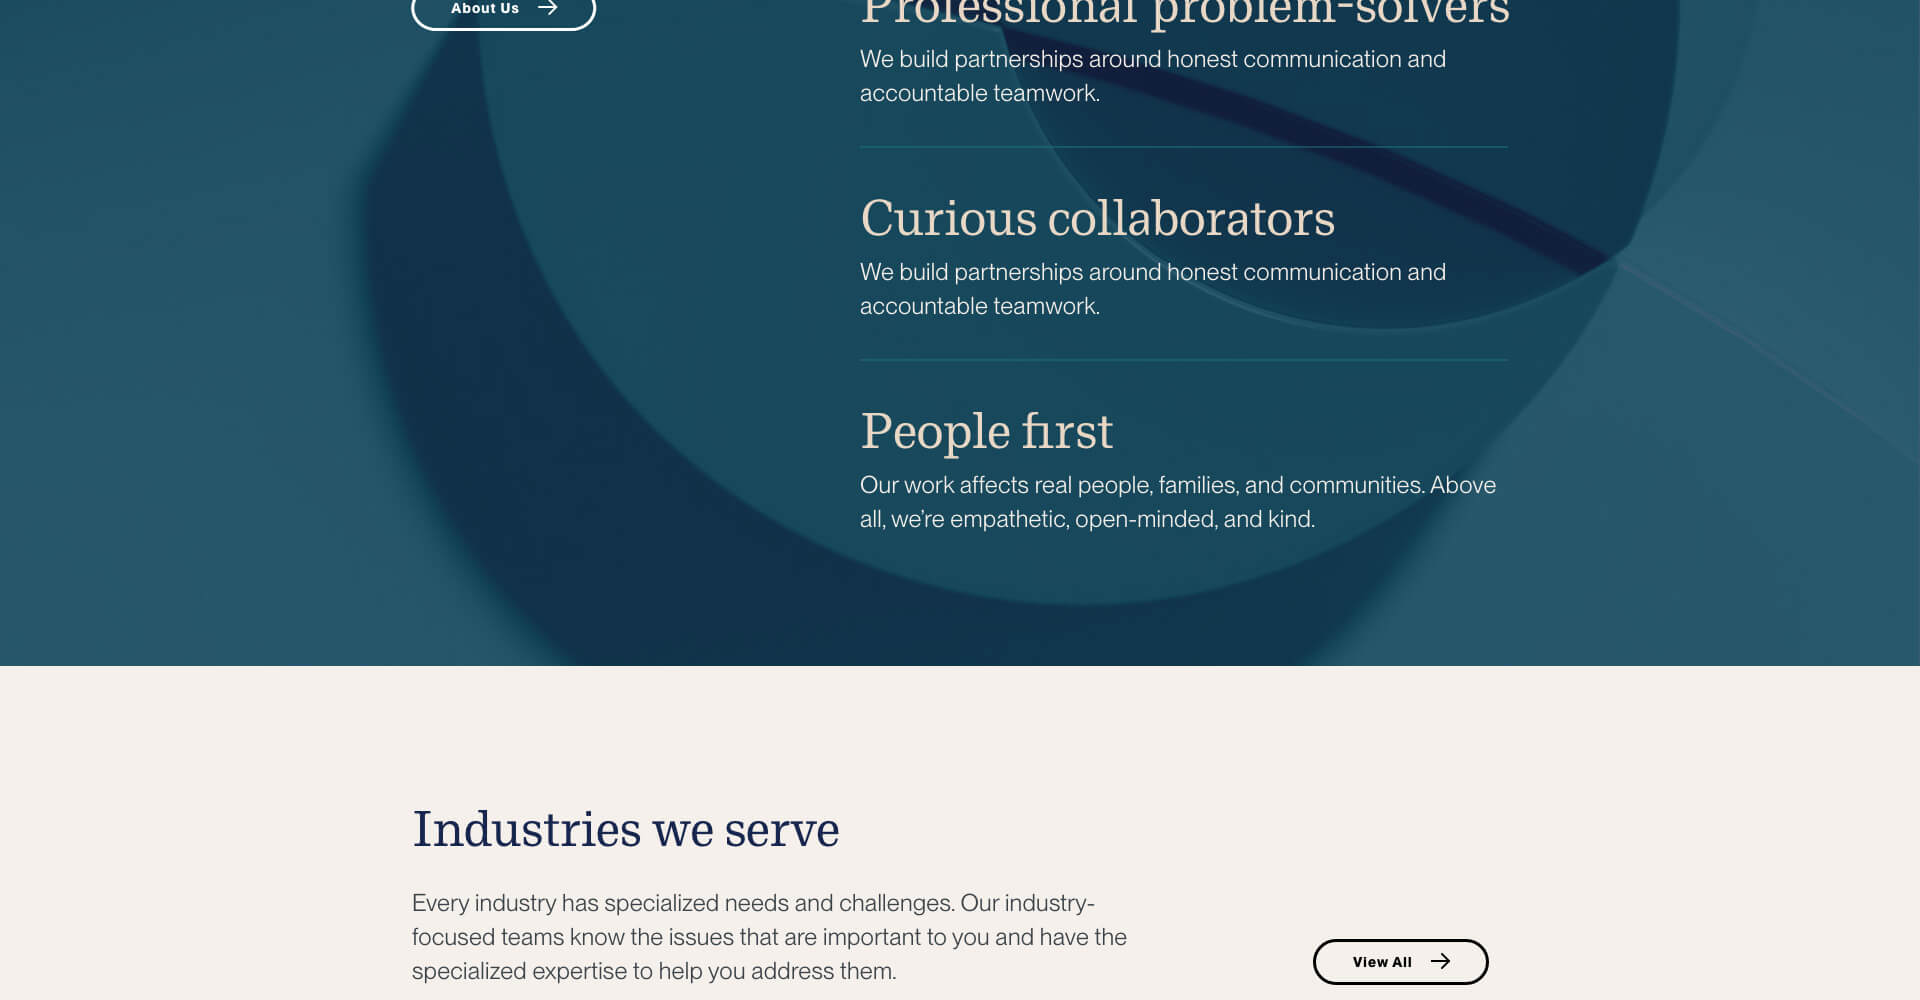 Homepage screenshot of Sensiba